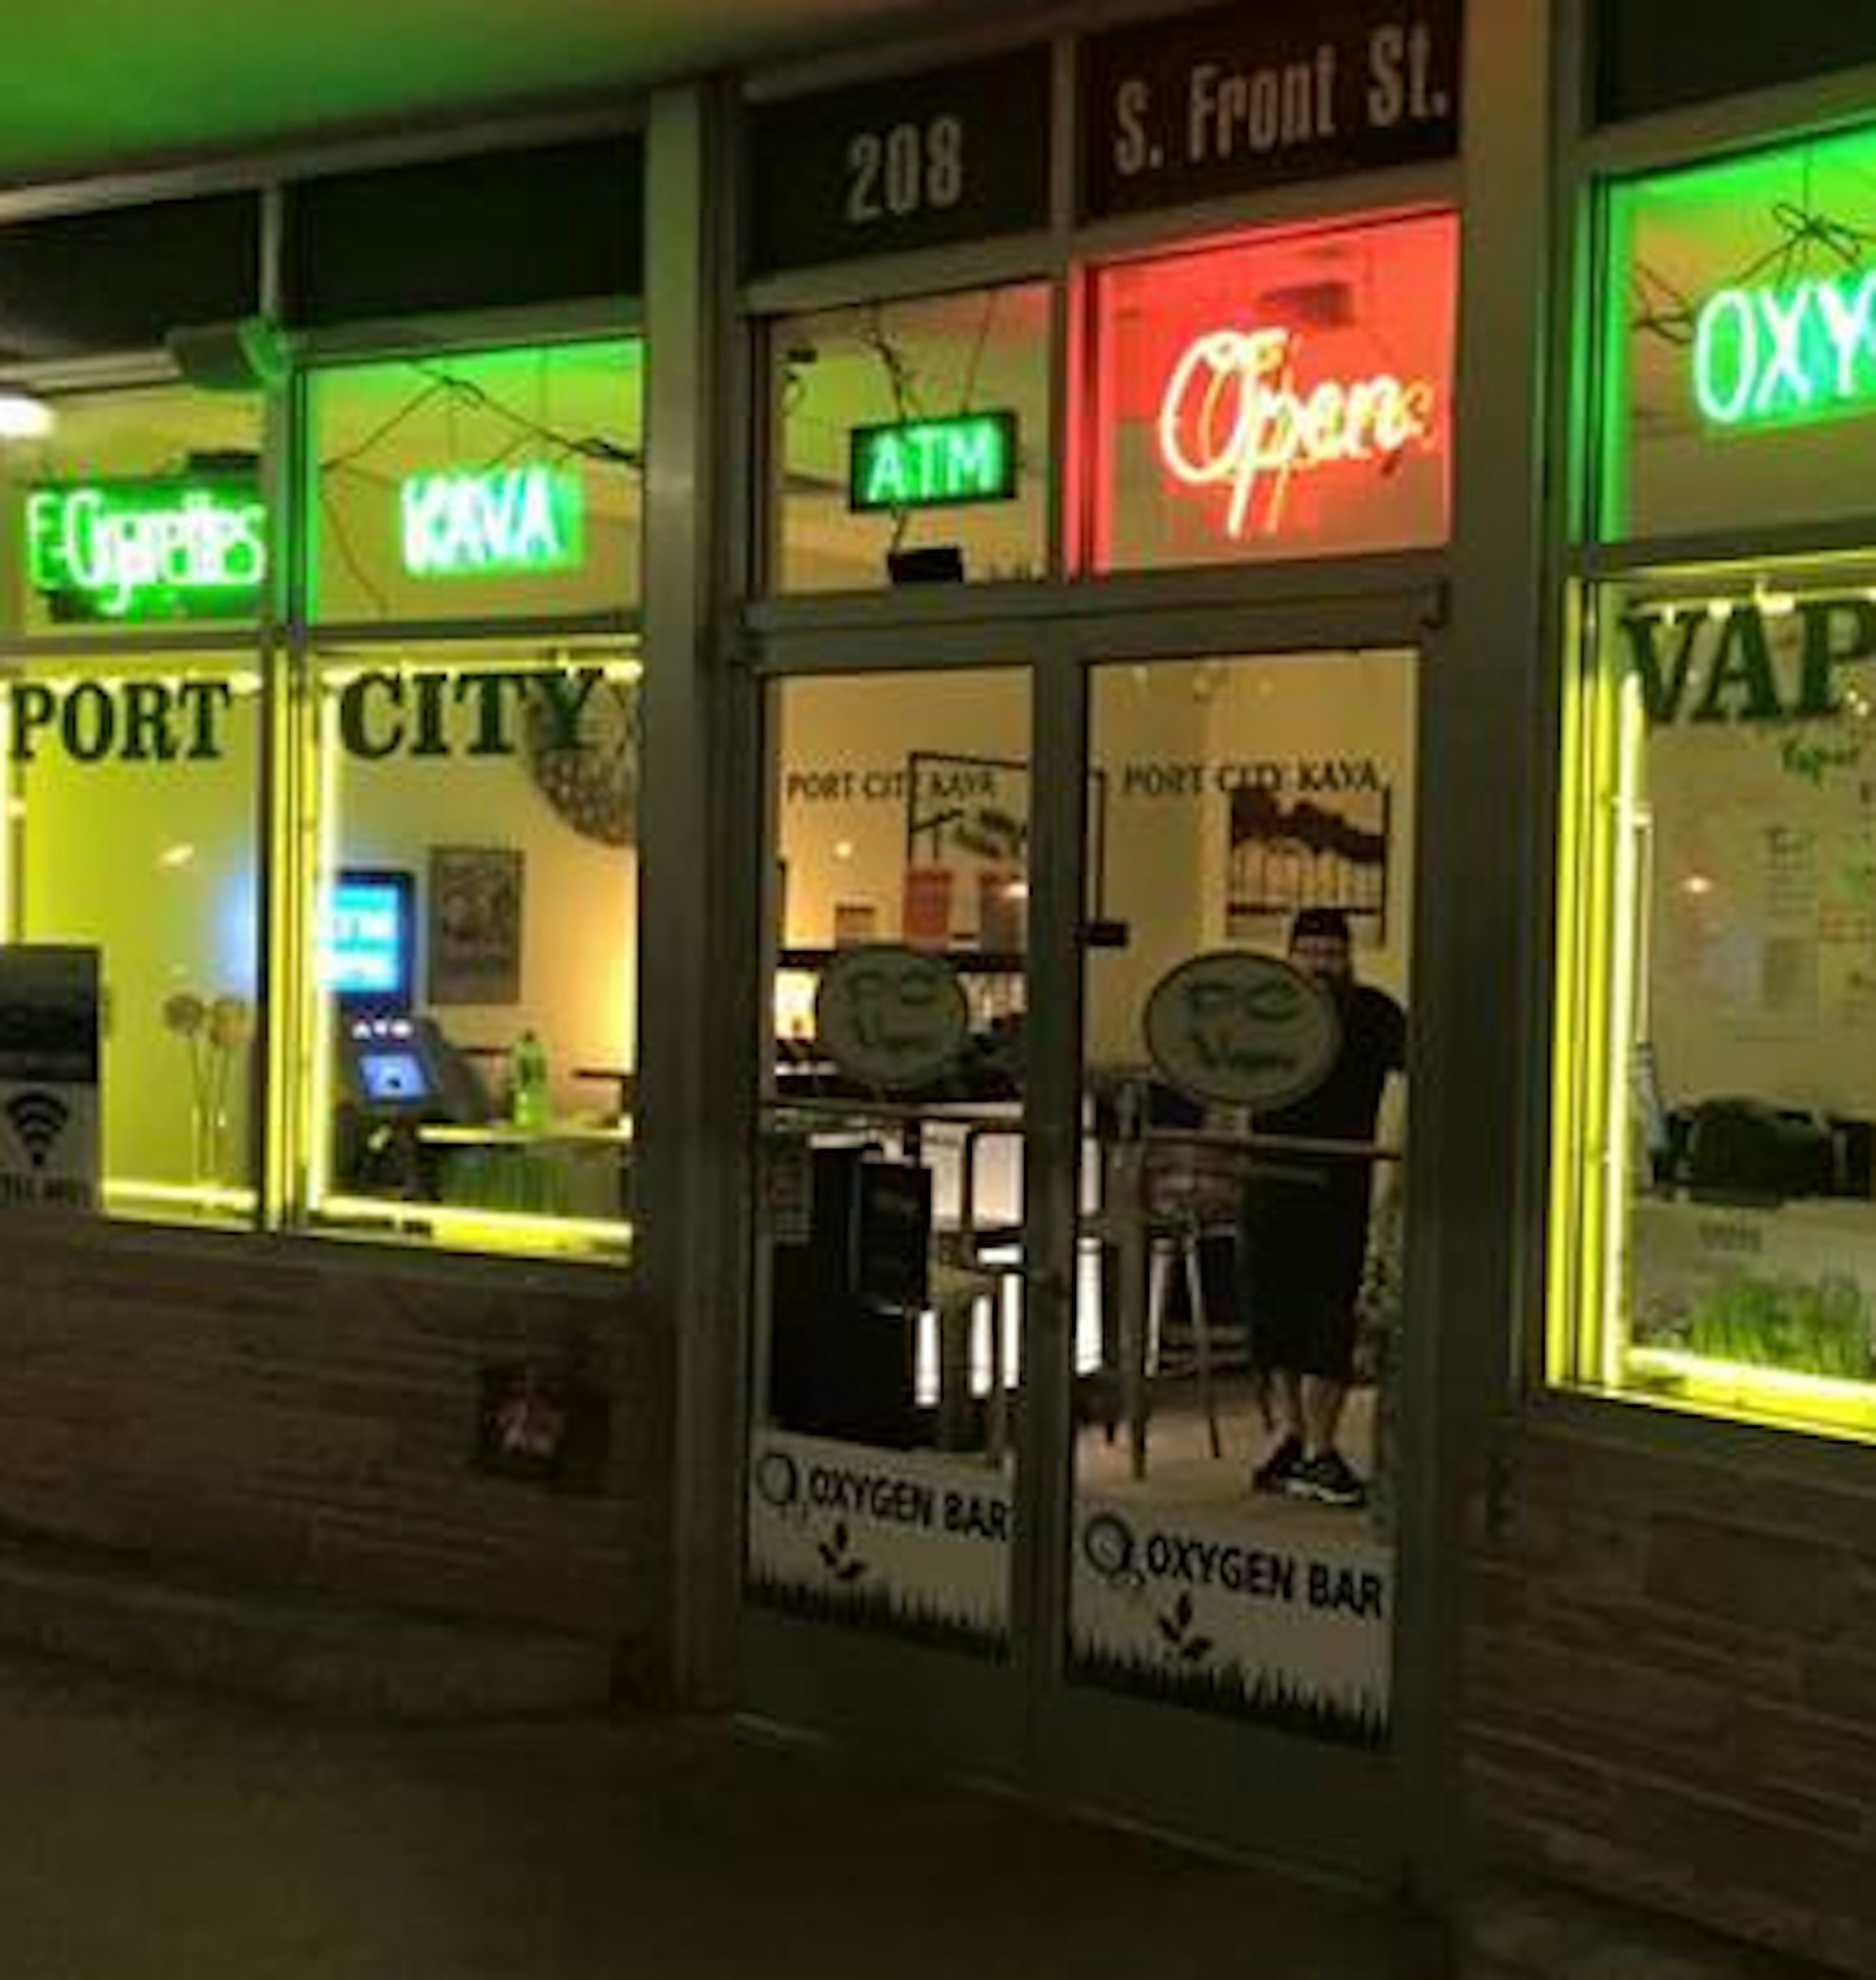 Port City Vapor Shop